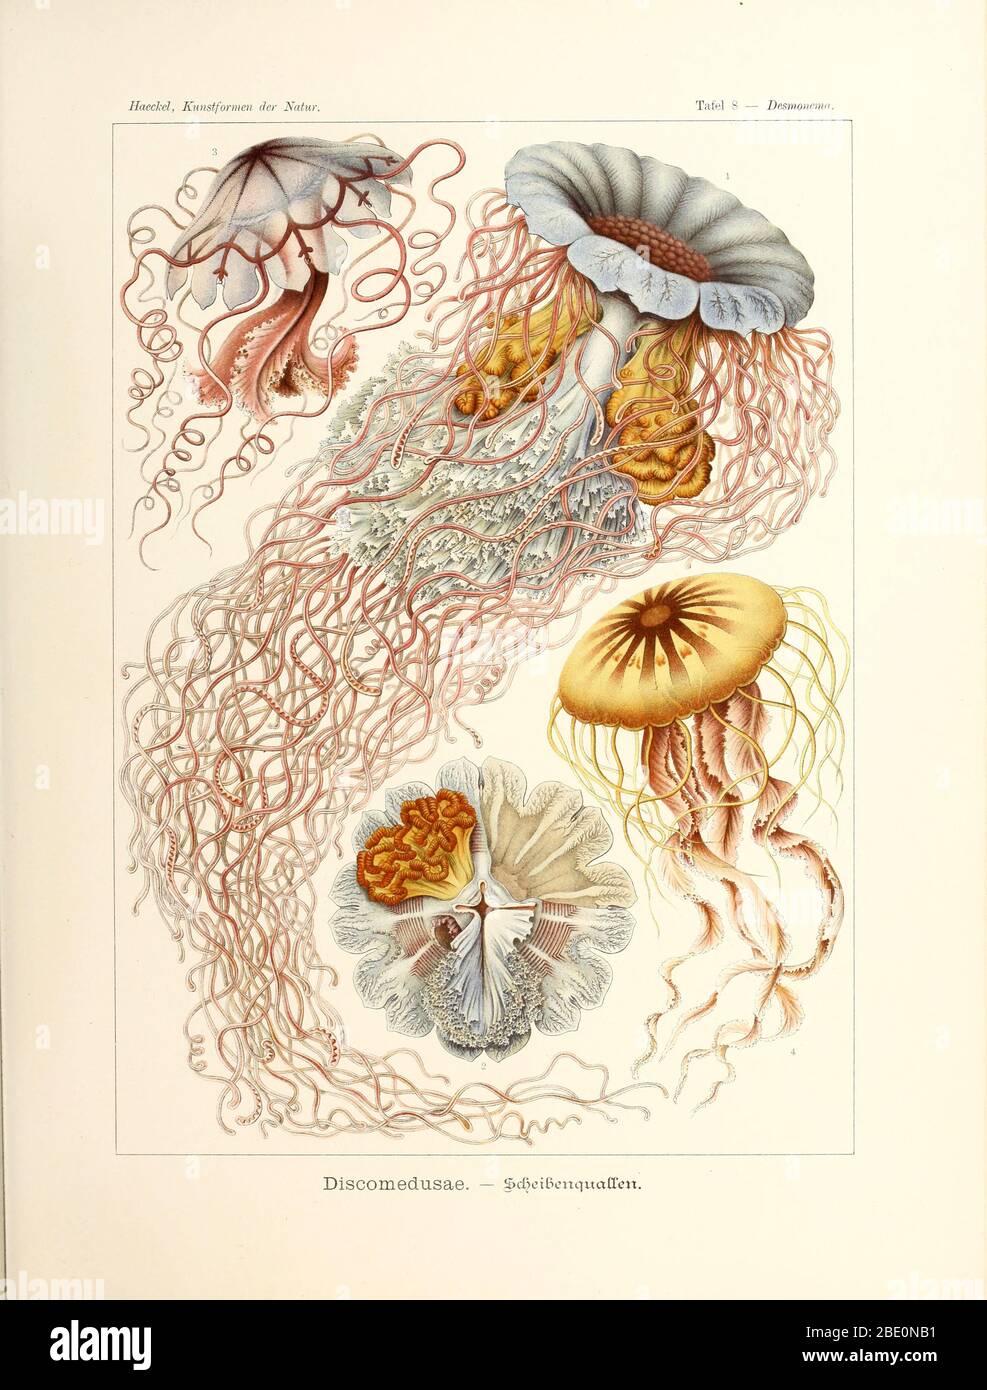 Discomedusae (tutti i semi-eostomidi), della Kunstformen der Natur di Ernst Haeckel, 1904 Foto Stock